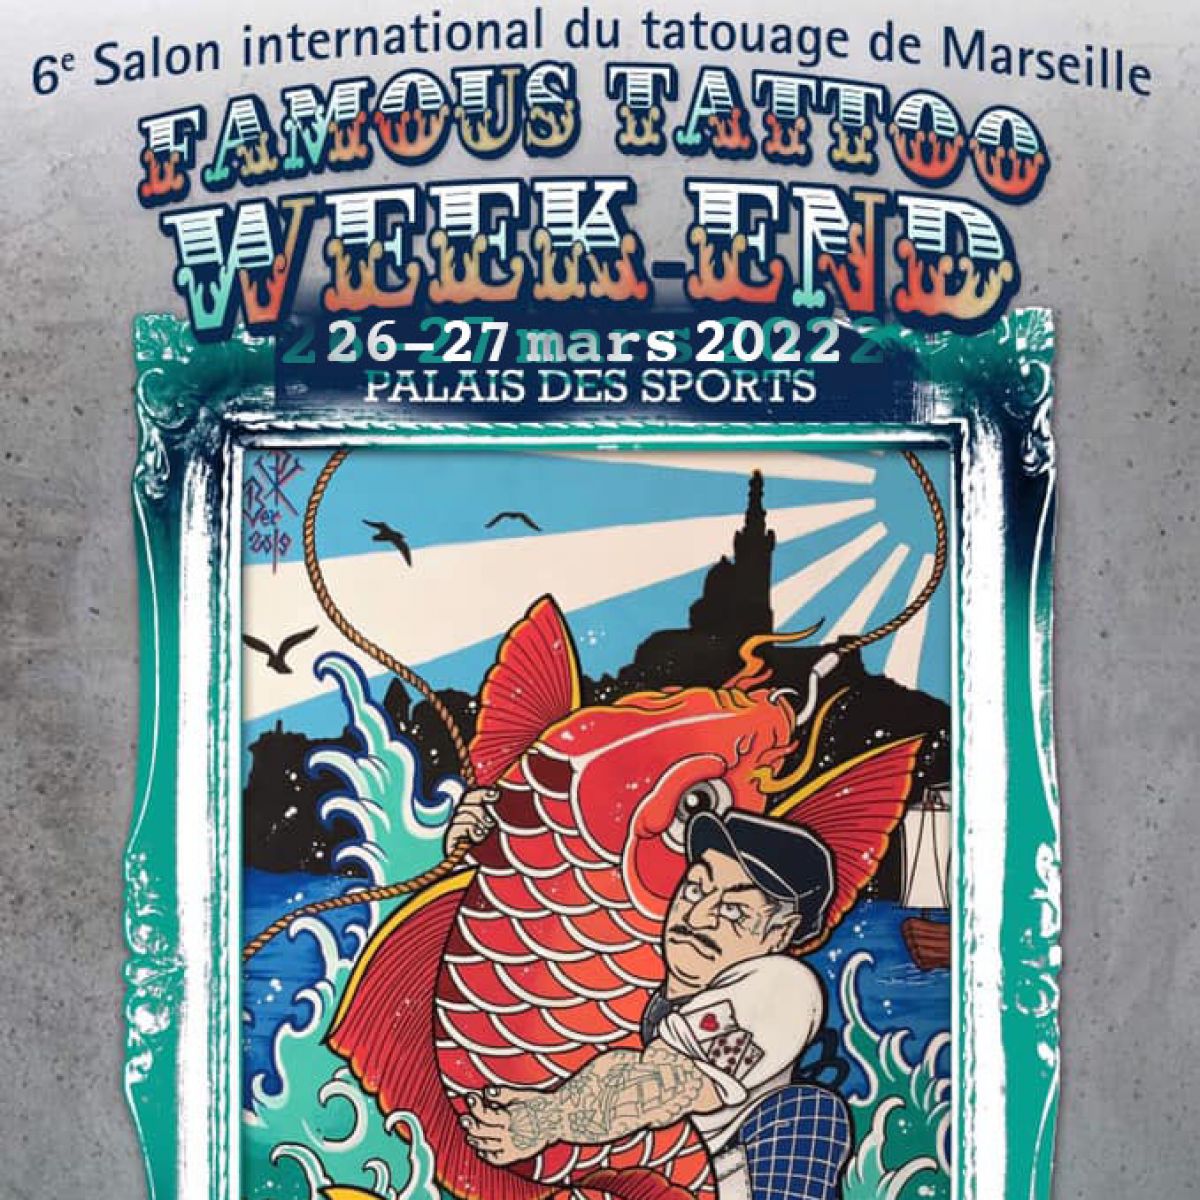 6e Salon international du tatouage de Marseille